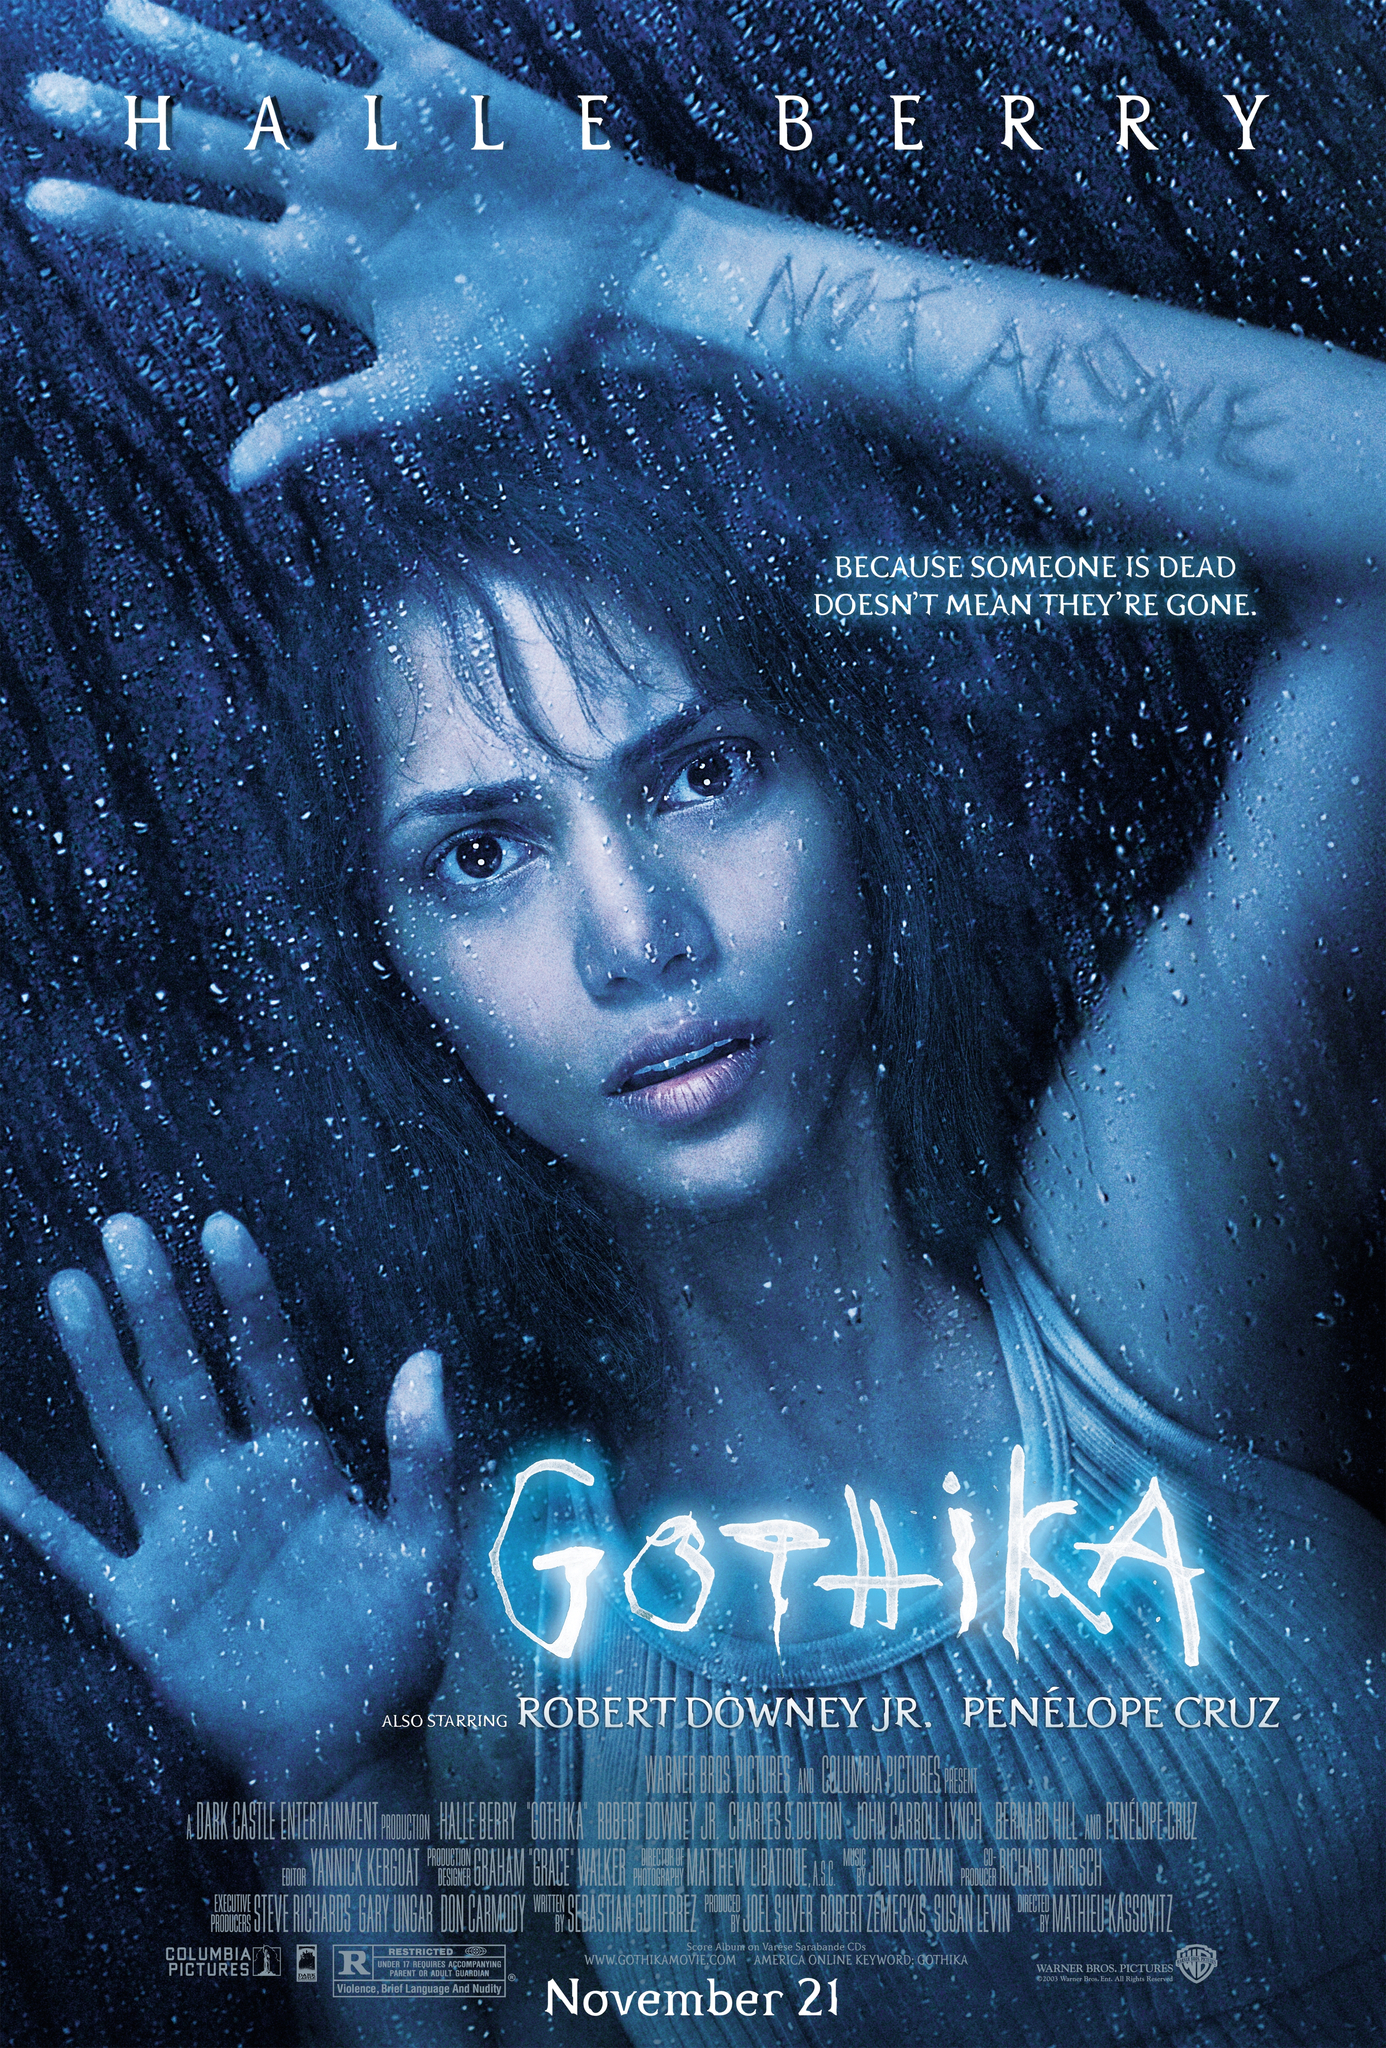 Stiahni si Filmy CZ/SK dabing Gothika (2003)(CZ/EN)[1080p] = CSFD 64%